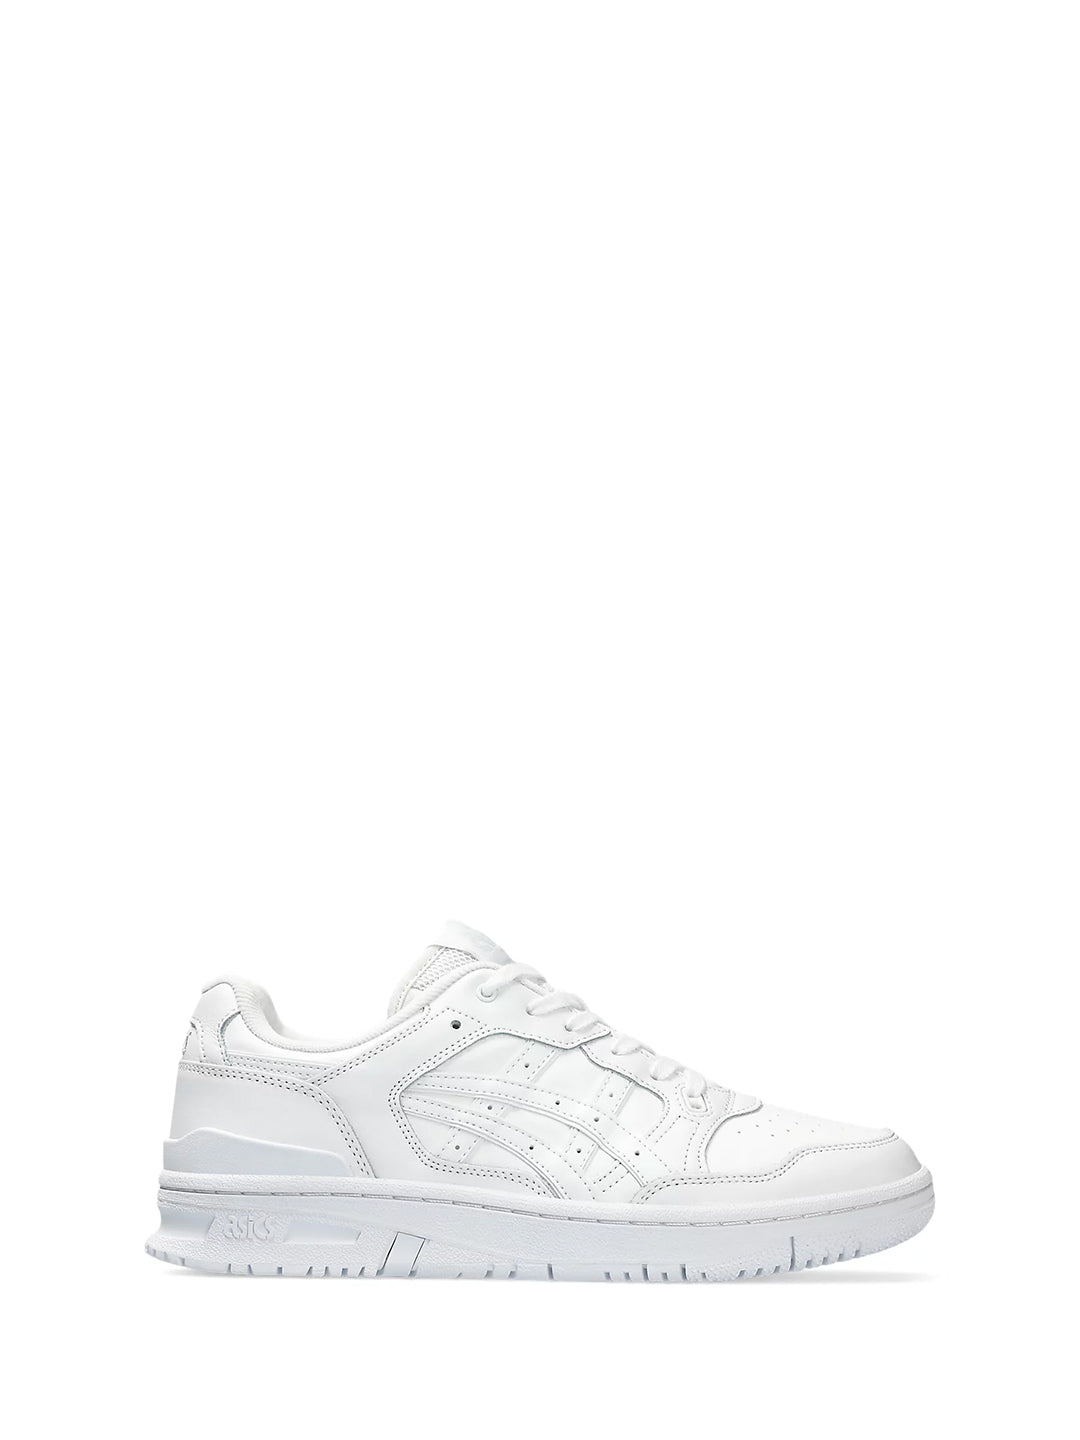 Asics Ex 89 sneakers bianco